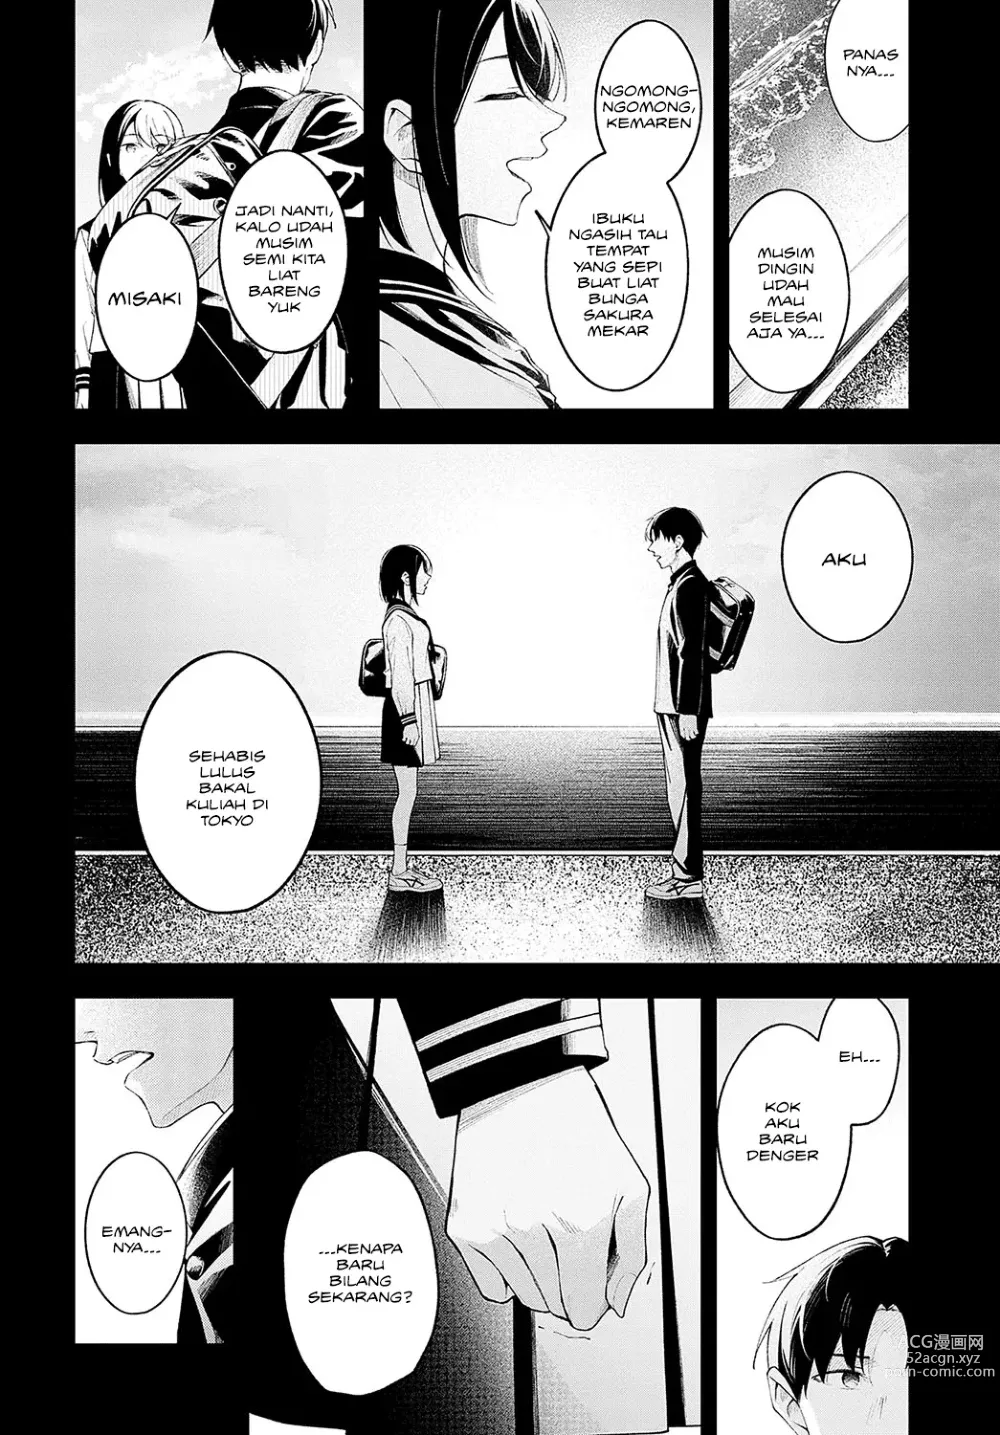 Page 6 of manga Panasnya Pas